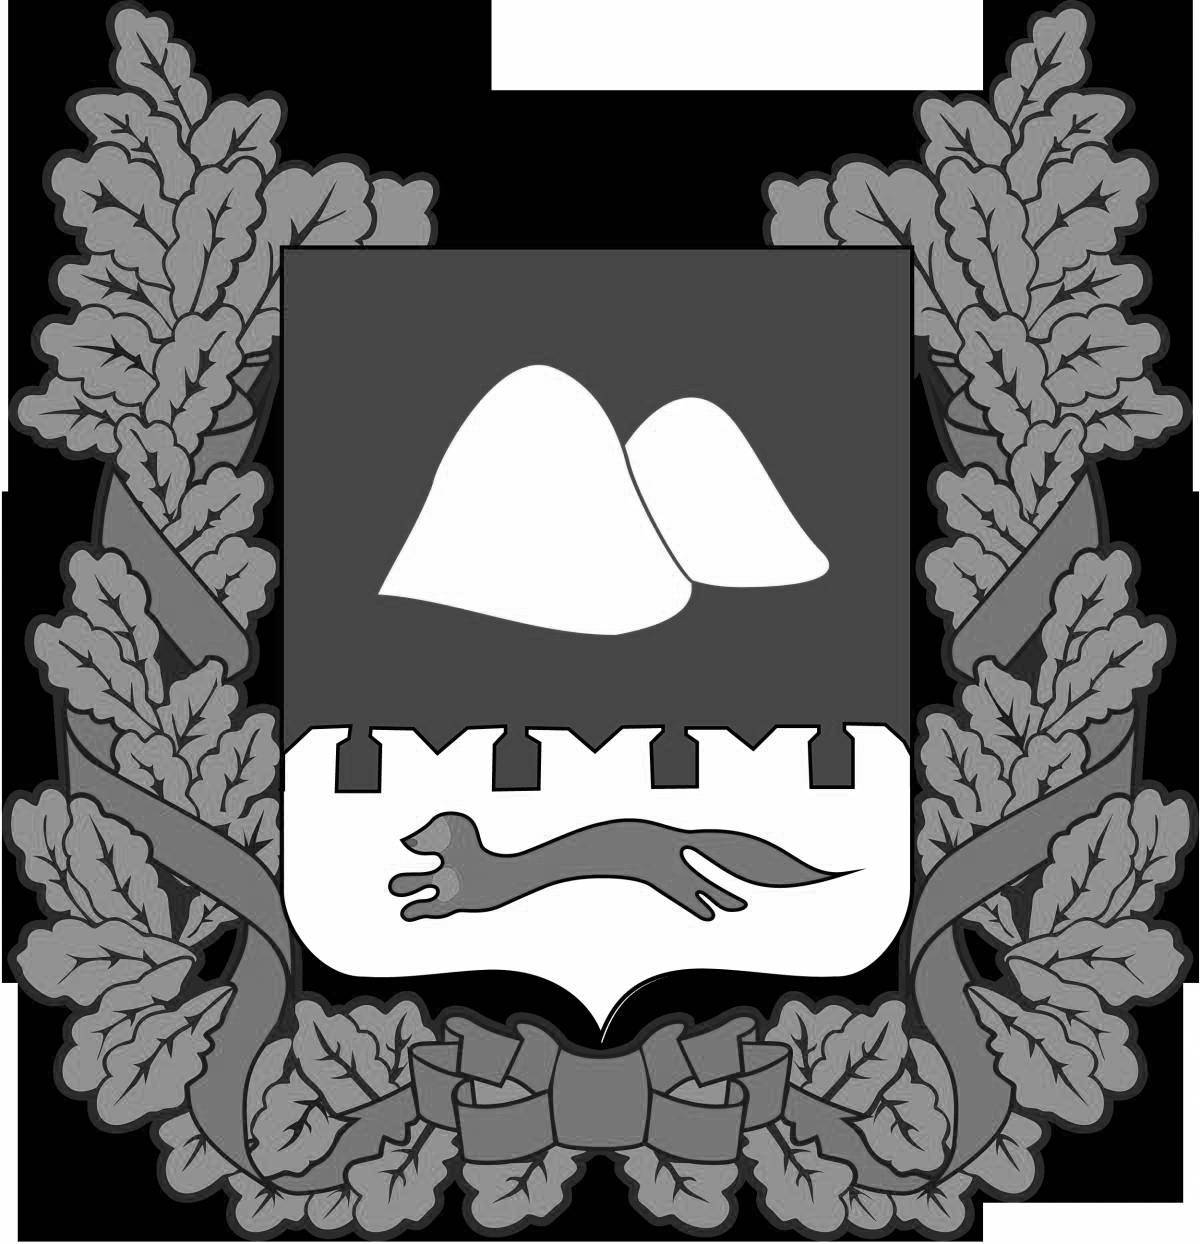 Royal coat of arms of the Kurgan region